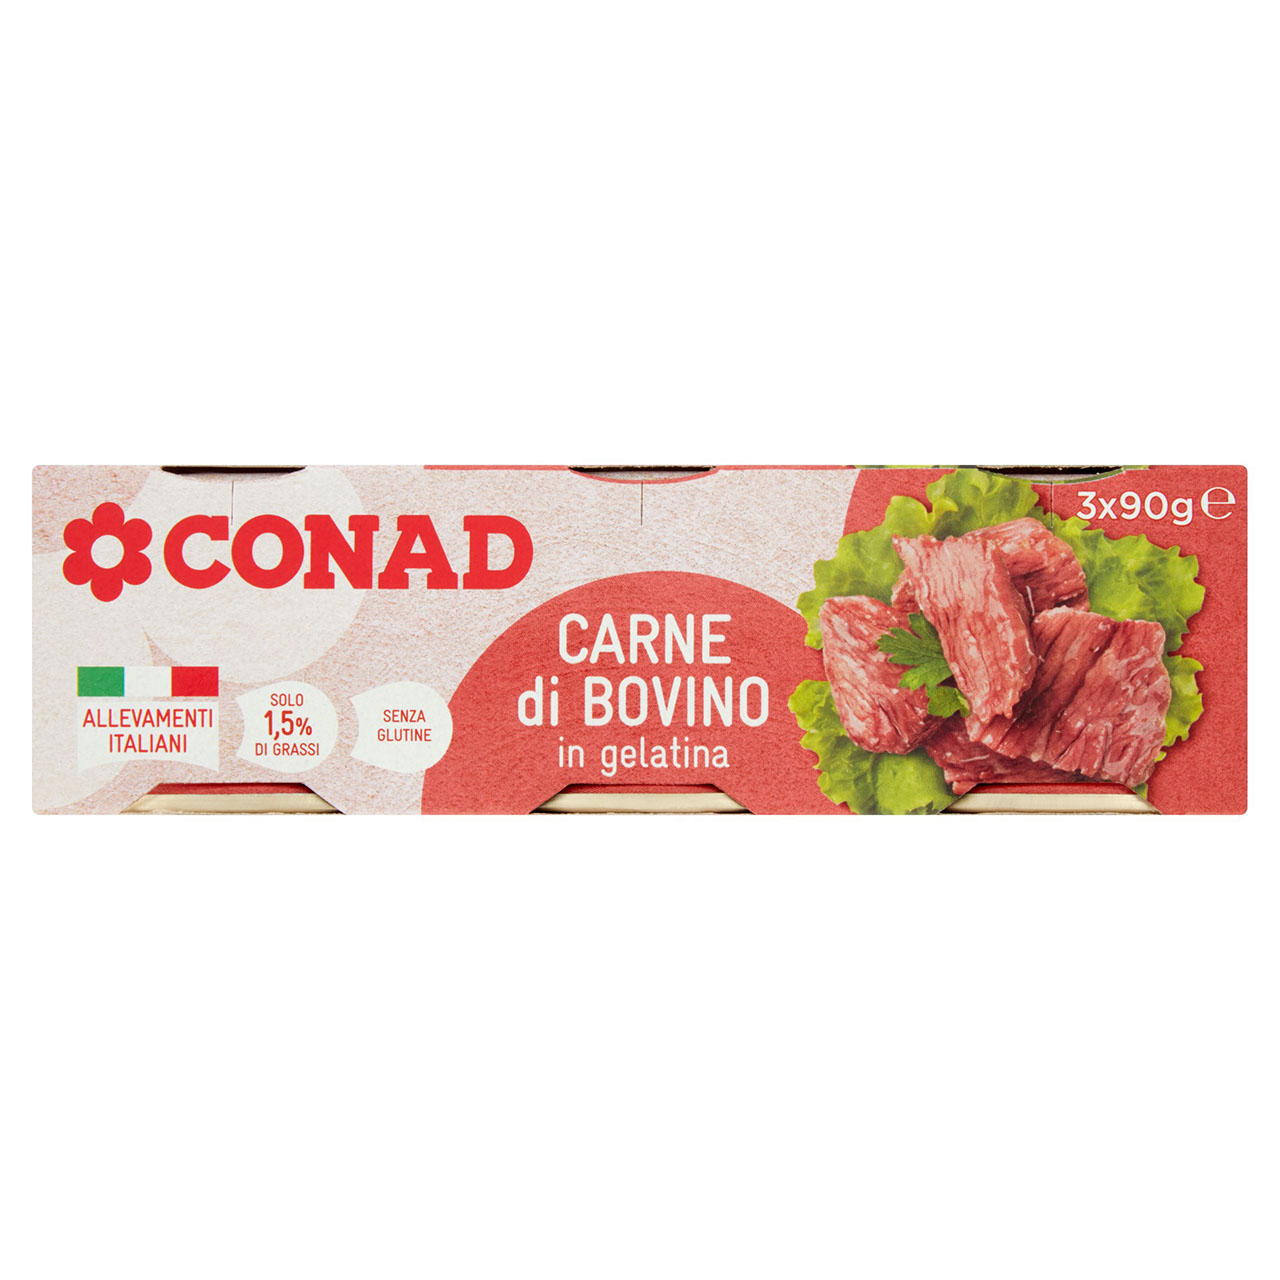 Carne di Bovino in gelatina 3 x 90 g Conad